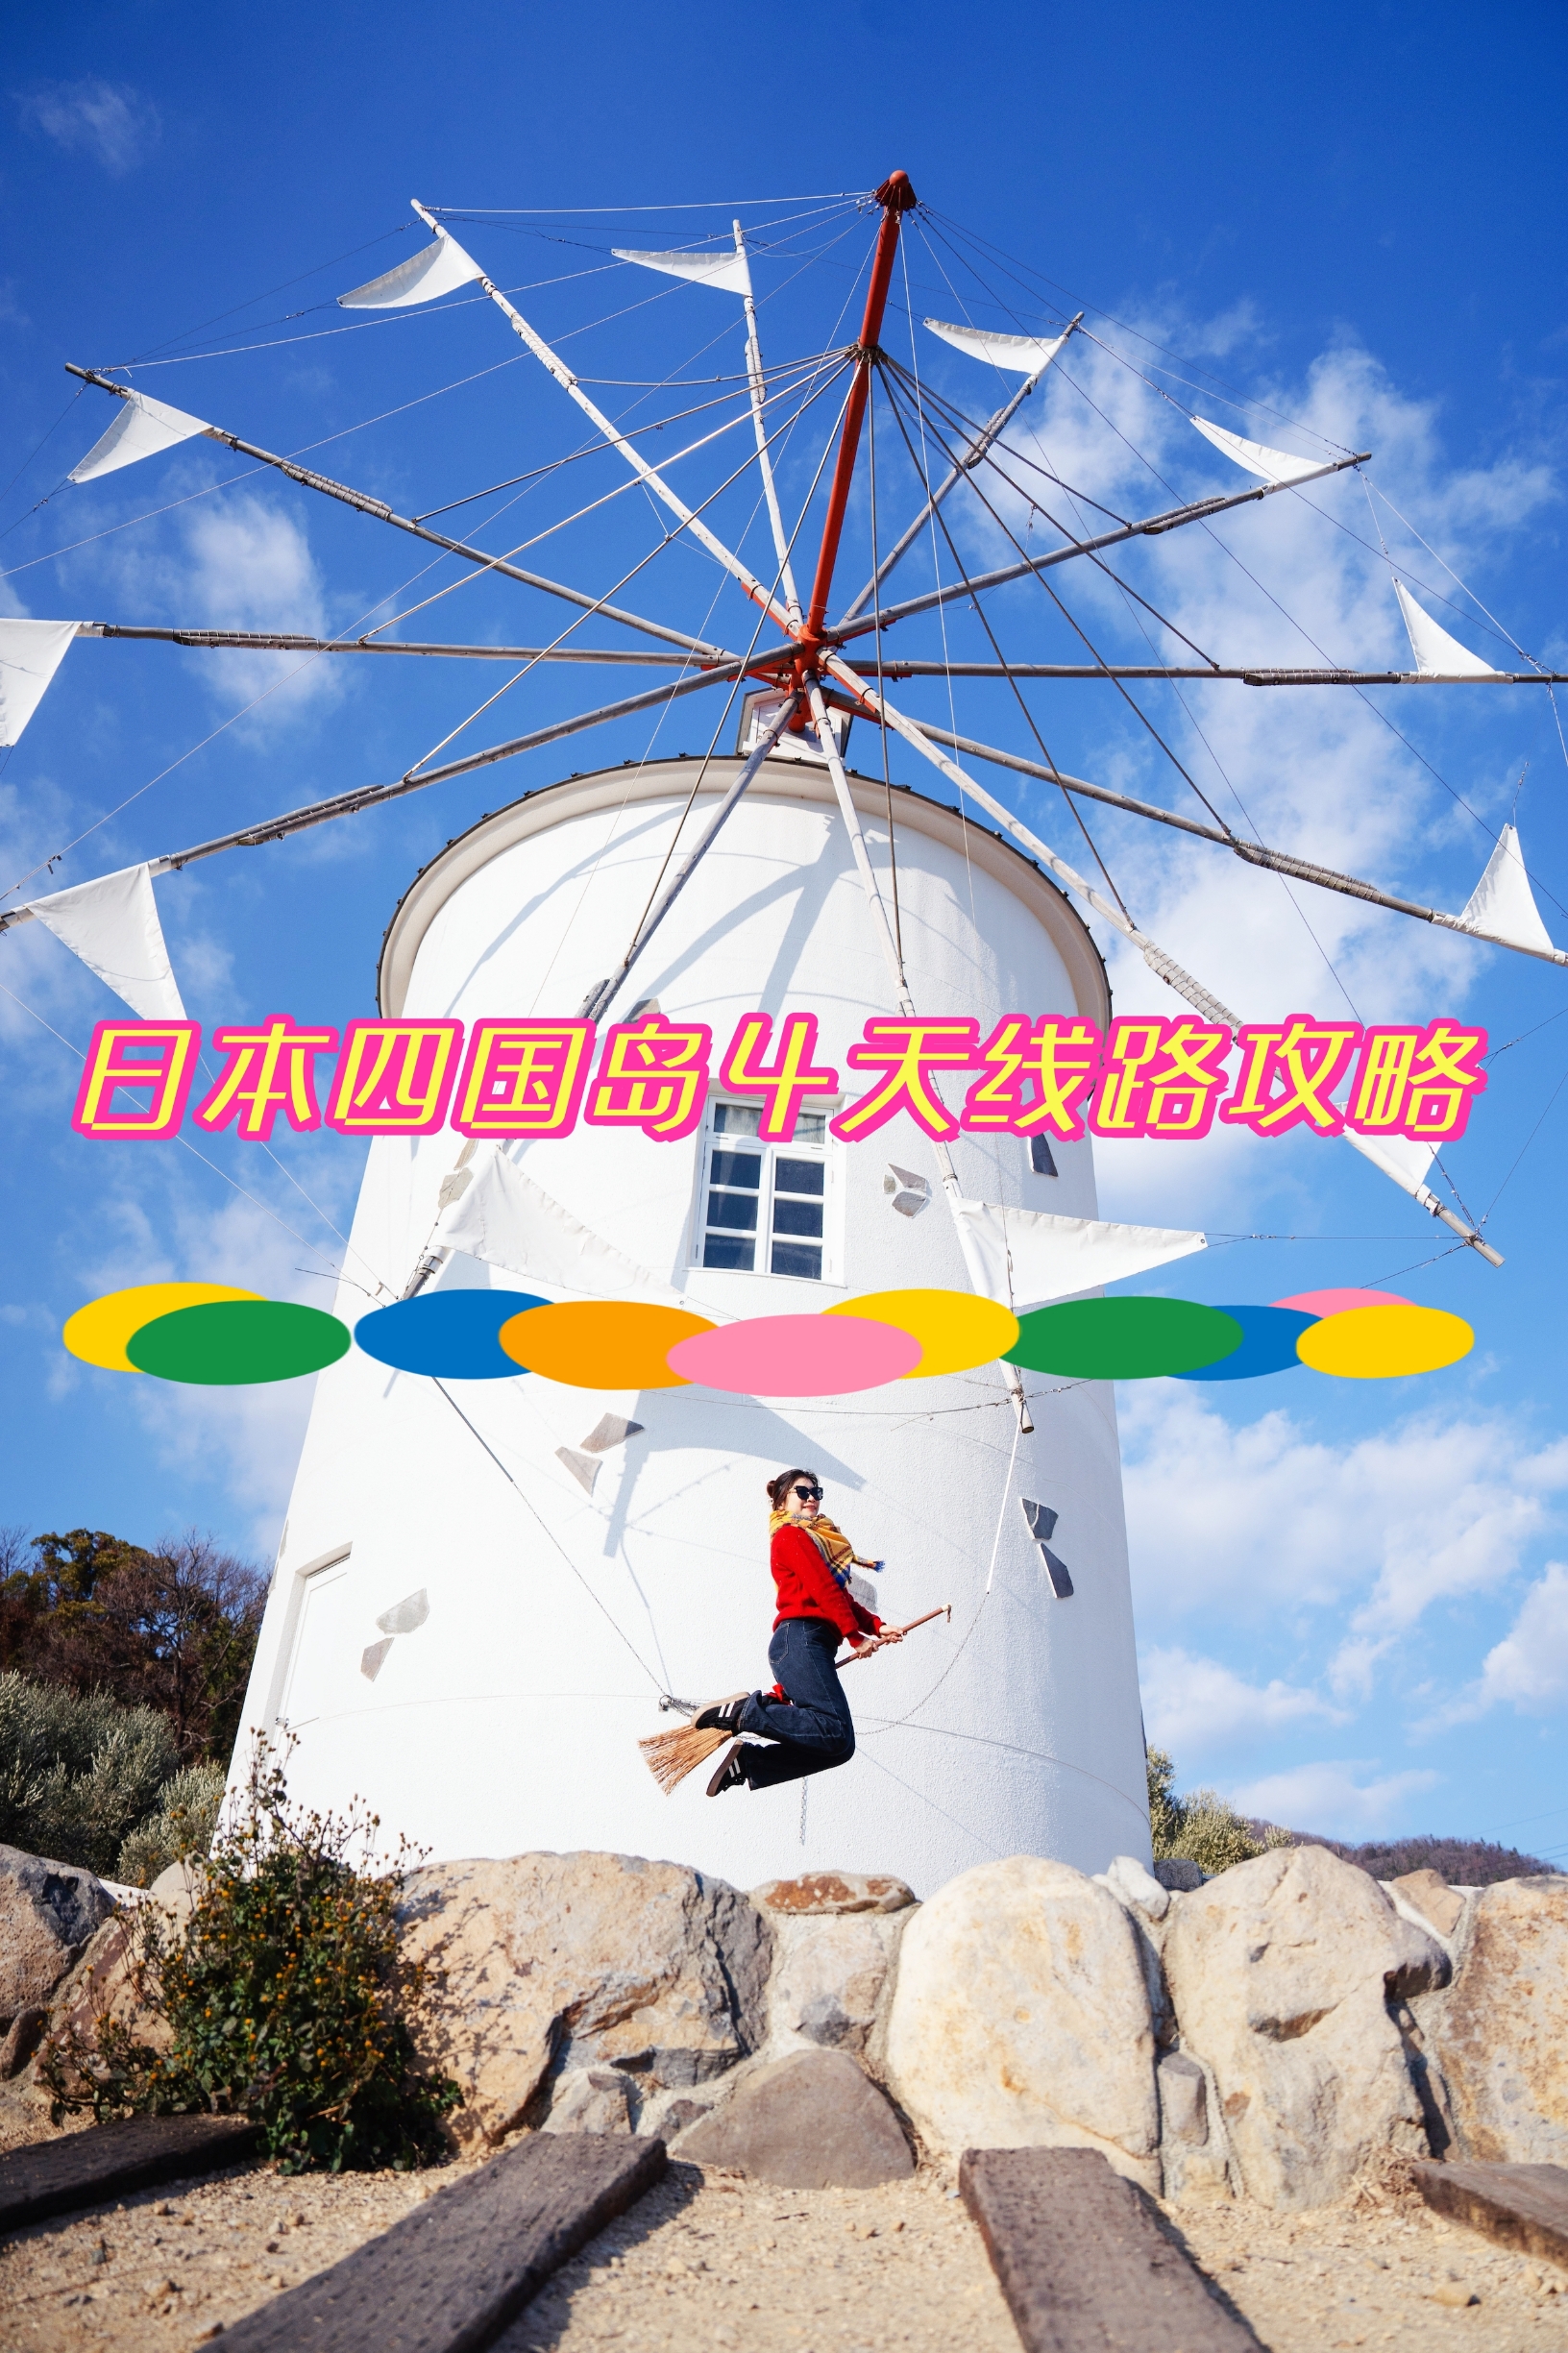 ❄️最有幸福感的日本游当然就要选四国岛香川县💃